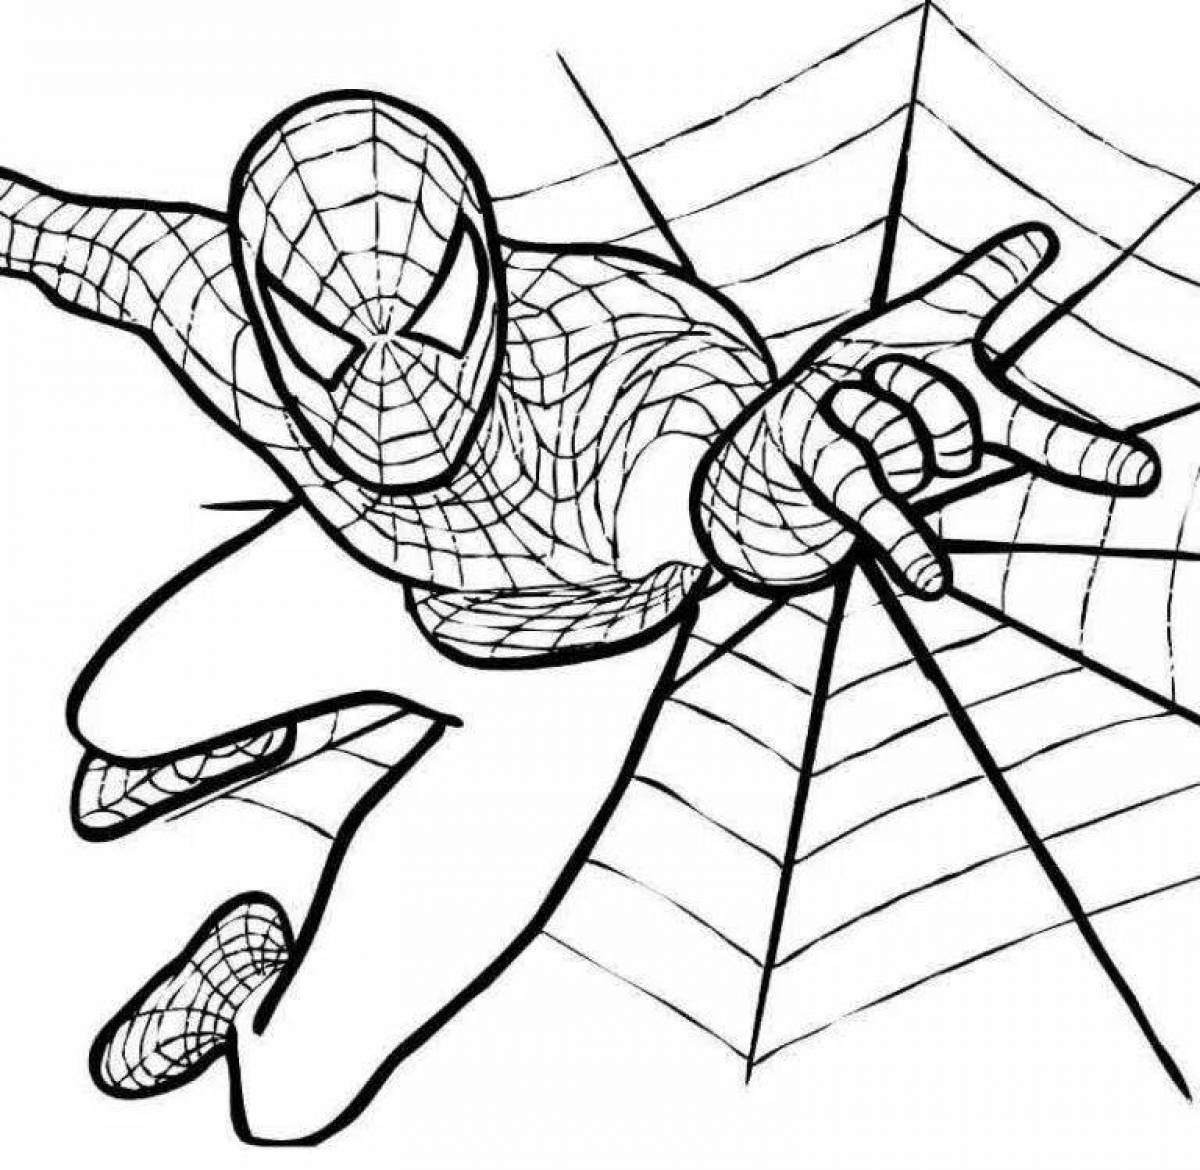 Spider-man humorous coloring book